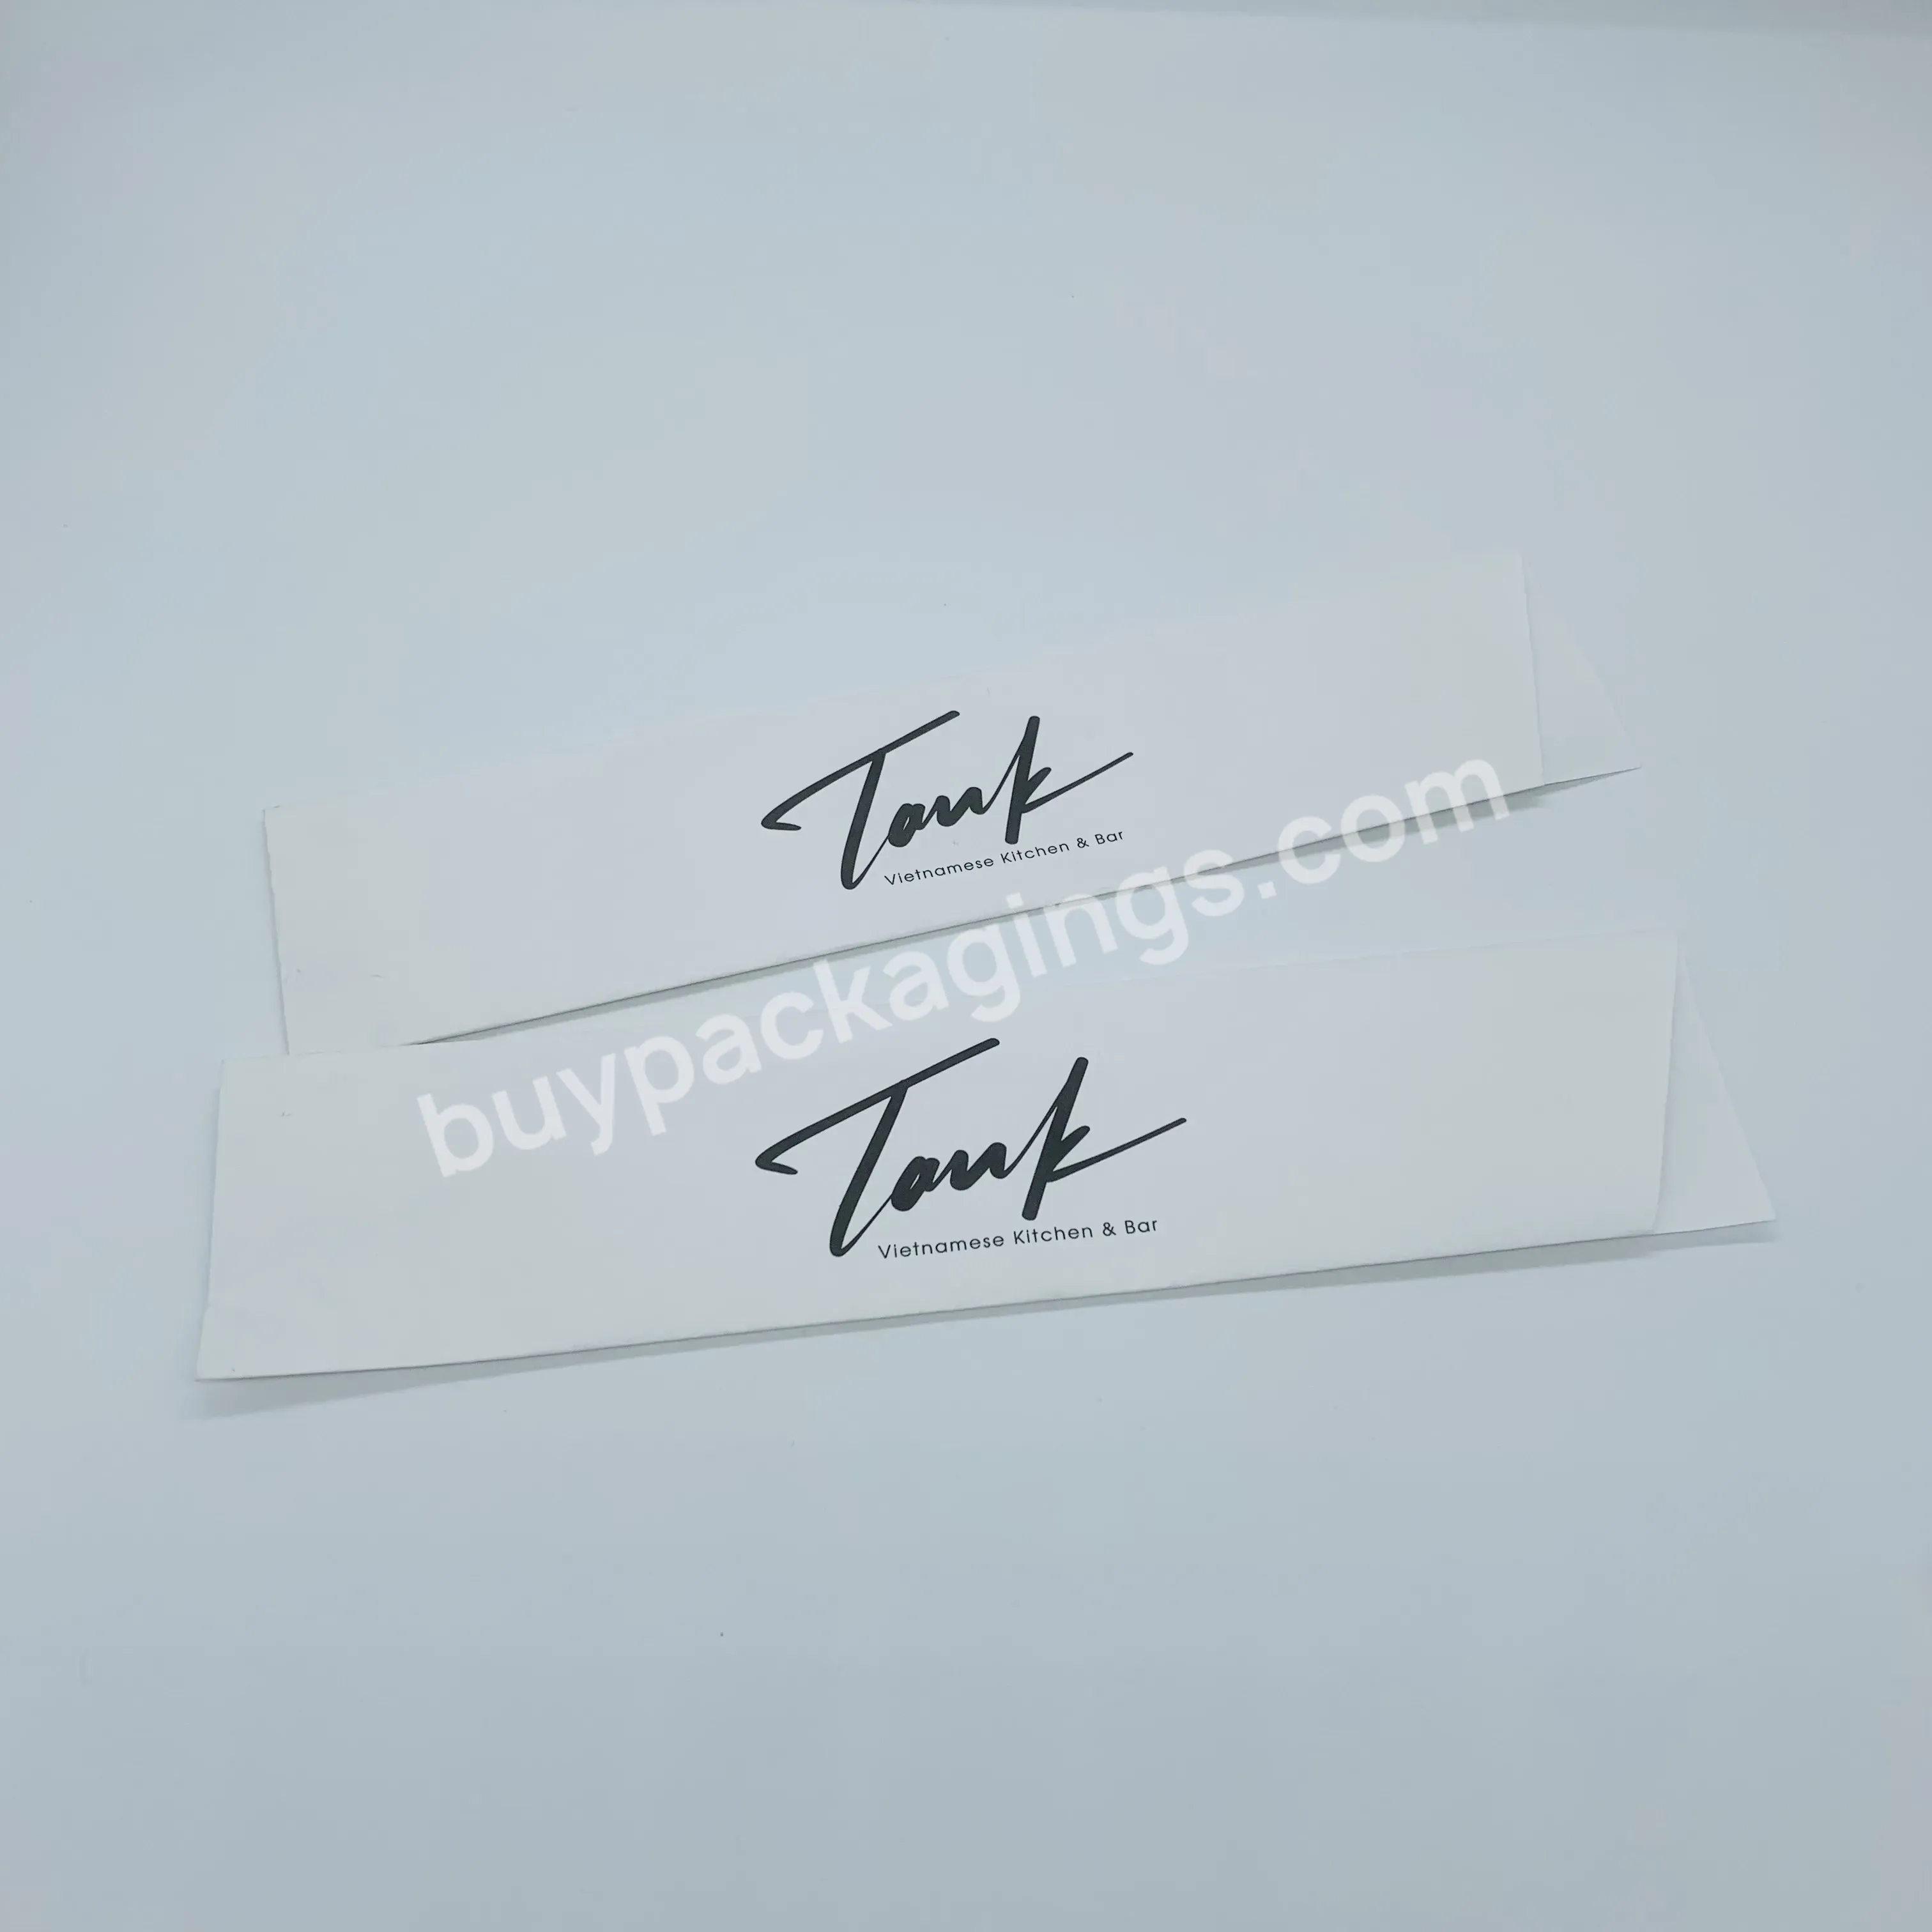 Restaurant Spoon Fork Knife Western Tableware Using Disposable Fsc Certified Paper Made Logo Printed Little Envelope Packet